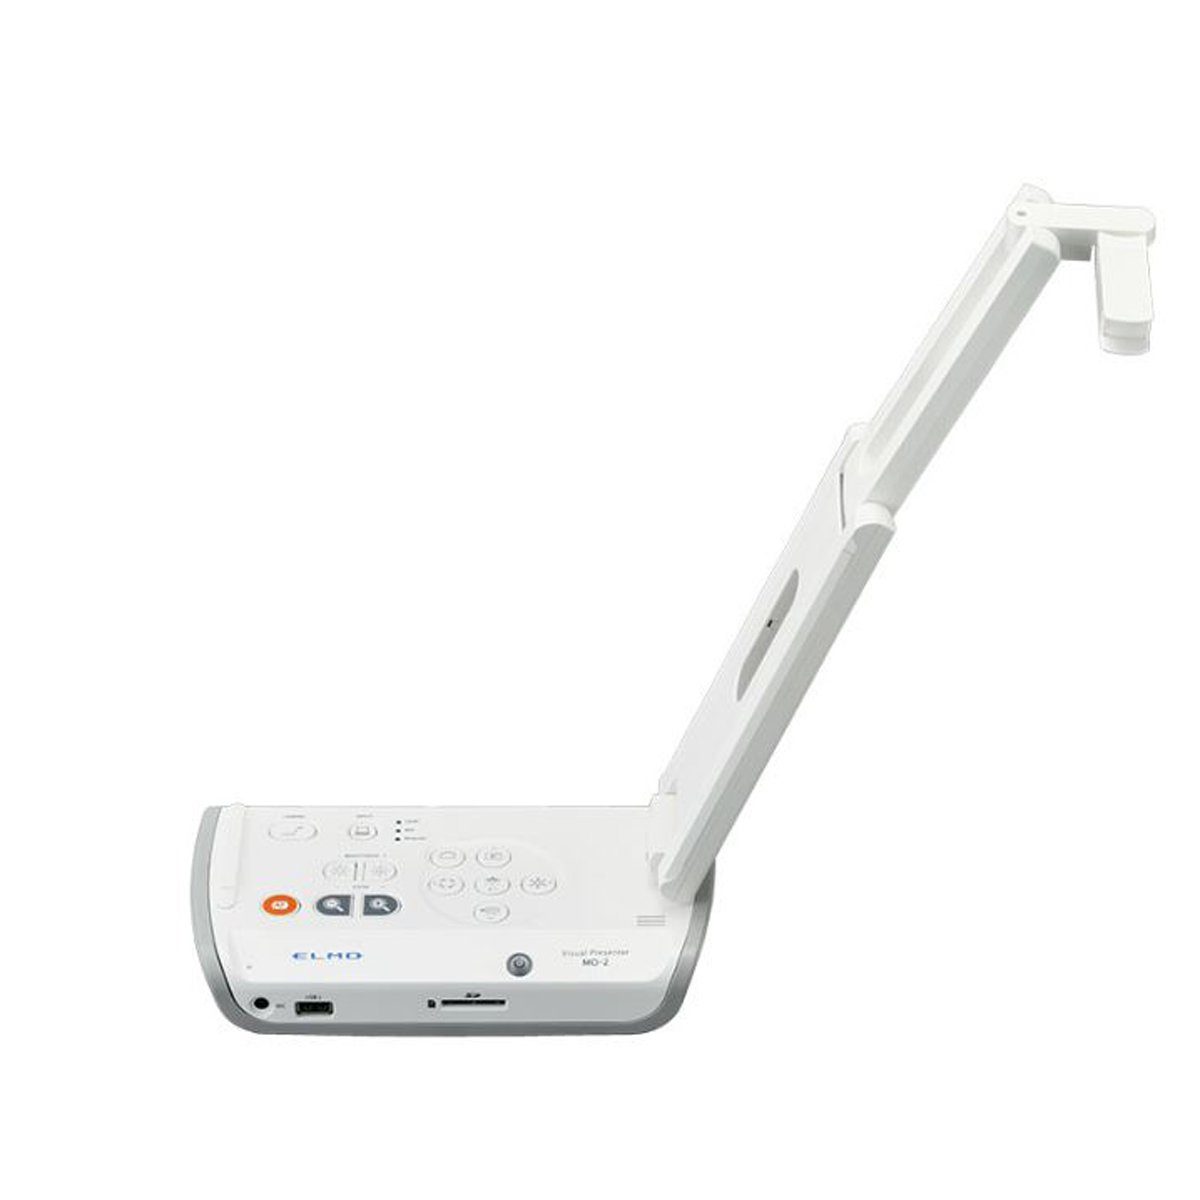 (FullHD WiFi 1920 8MP, x 2.4GHz/ Dokumentenkamera Mobile ELMO 5GHz) 1080, Dokumentenscanner, MO-2 IEEE802.11 a/b/g/n, 30FPS,